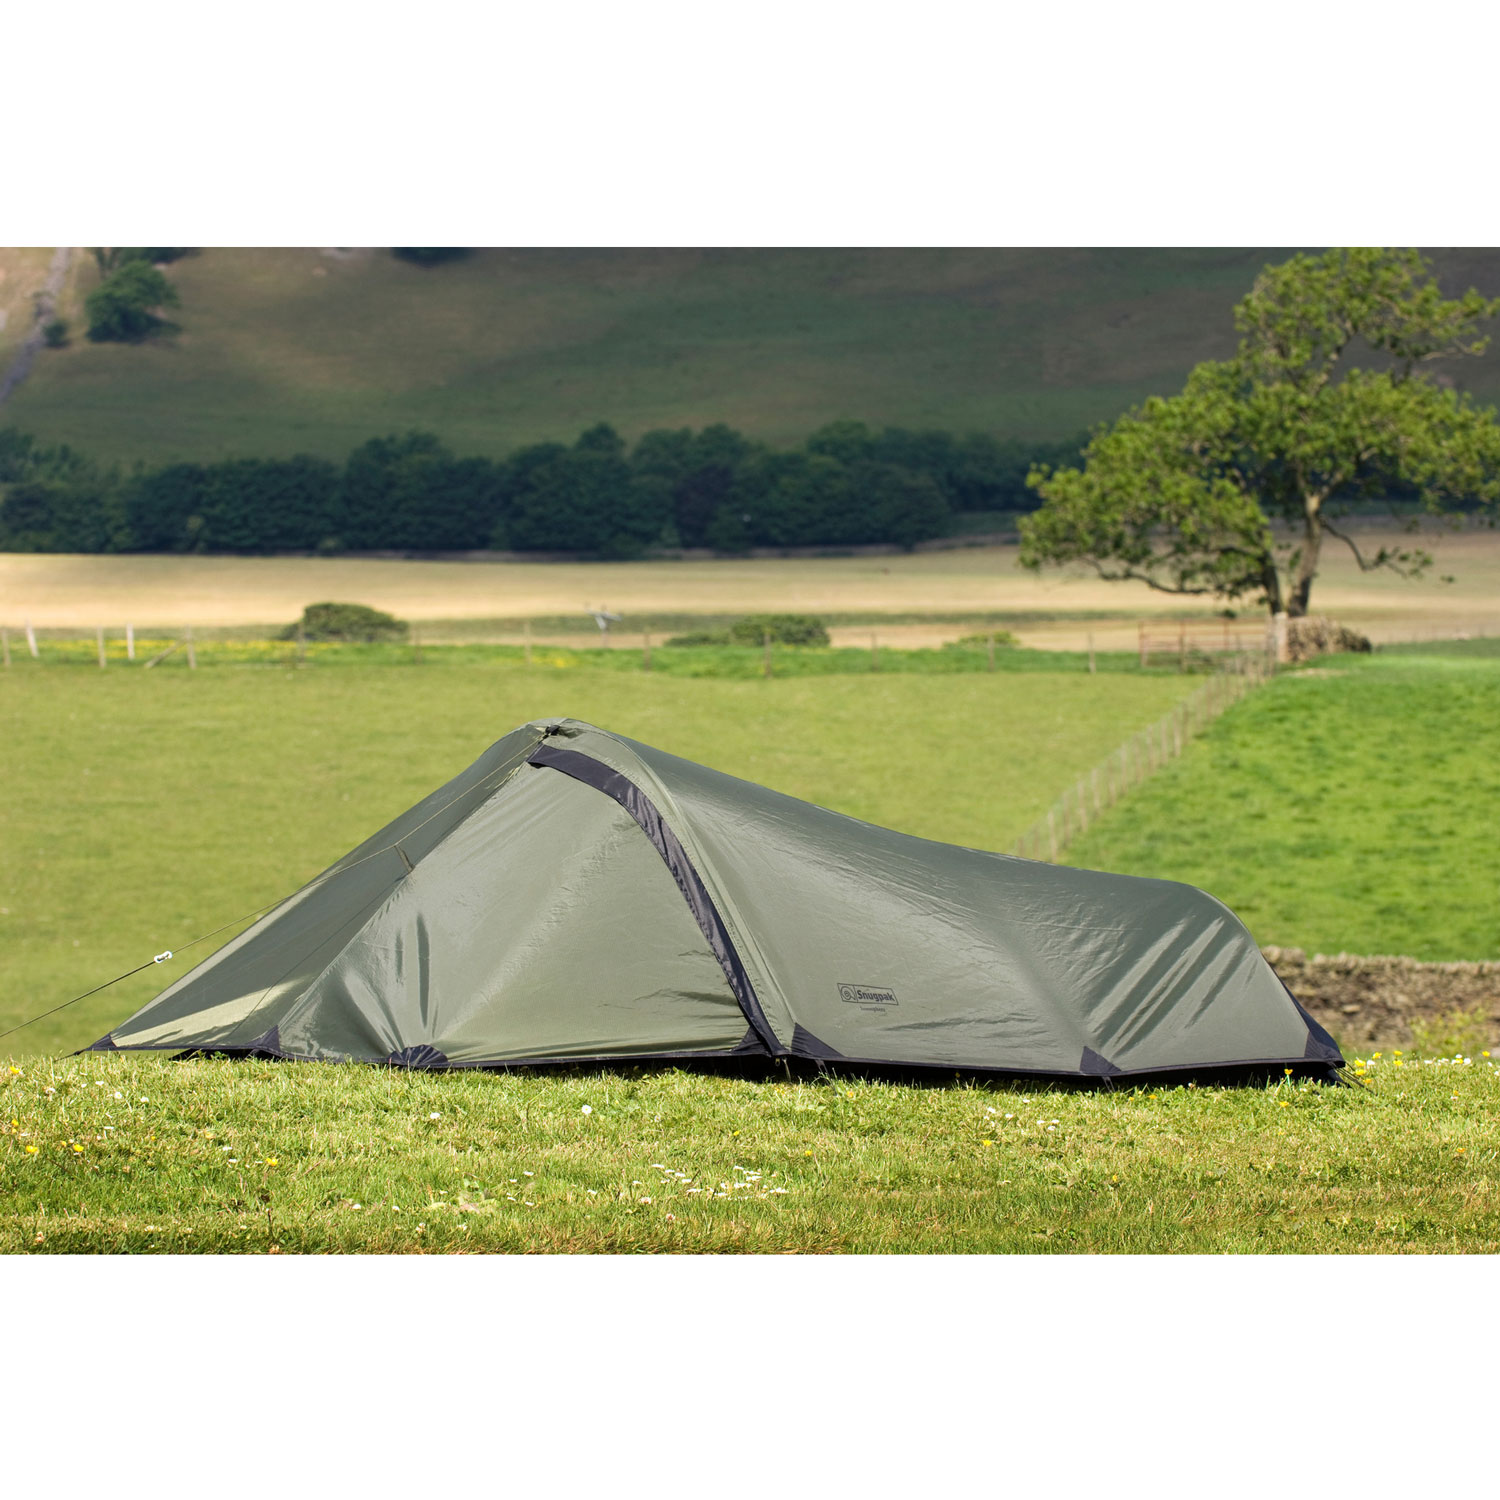 Палатка компакт. Snugpak Scorpion 2 Camping Tent. Палатка Snugpak Stratosphere od аналог. Одноместная палатка. Компактная одноместная палатка.